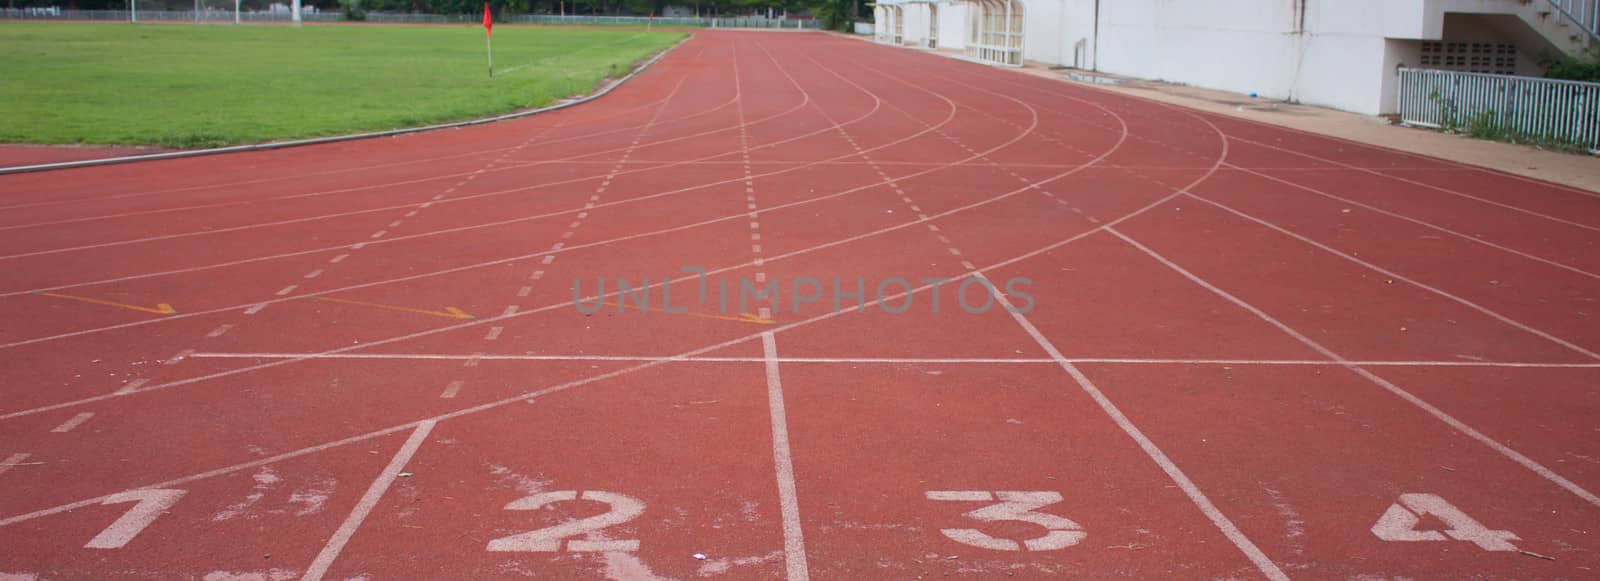 Stadium and running track by primzrider